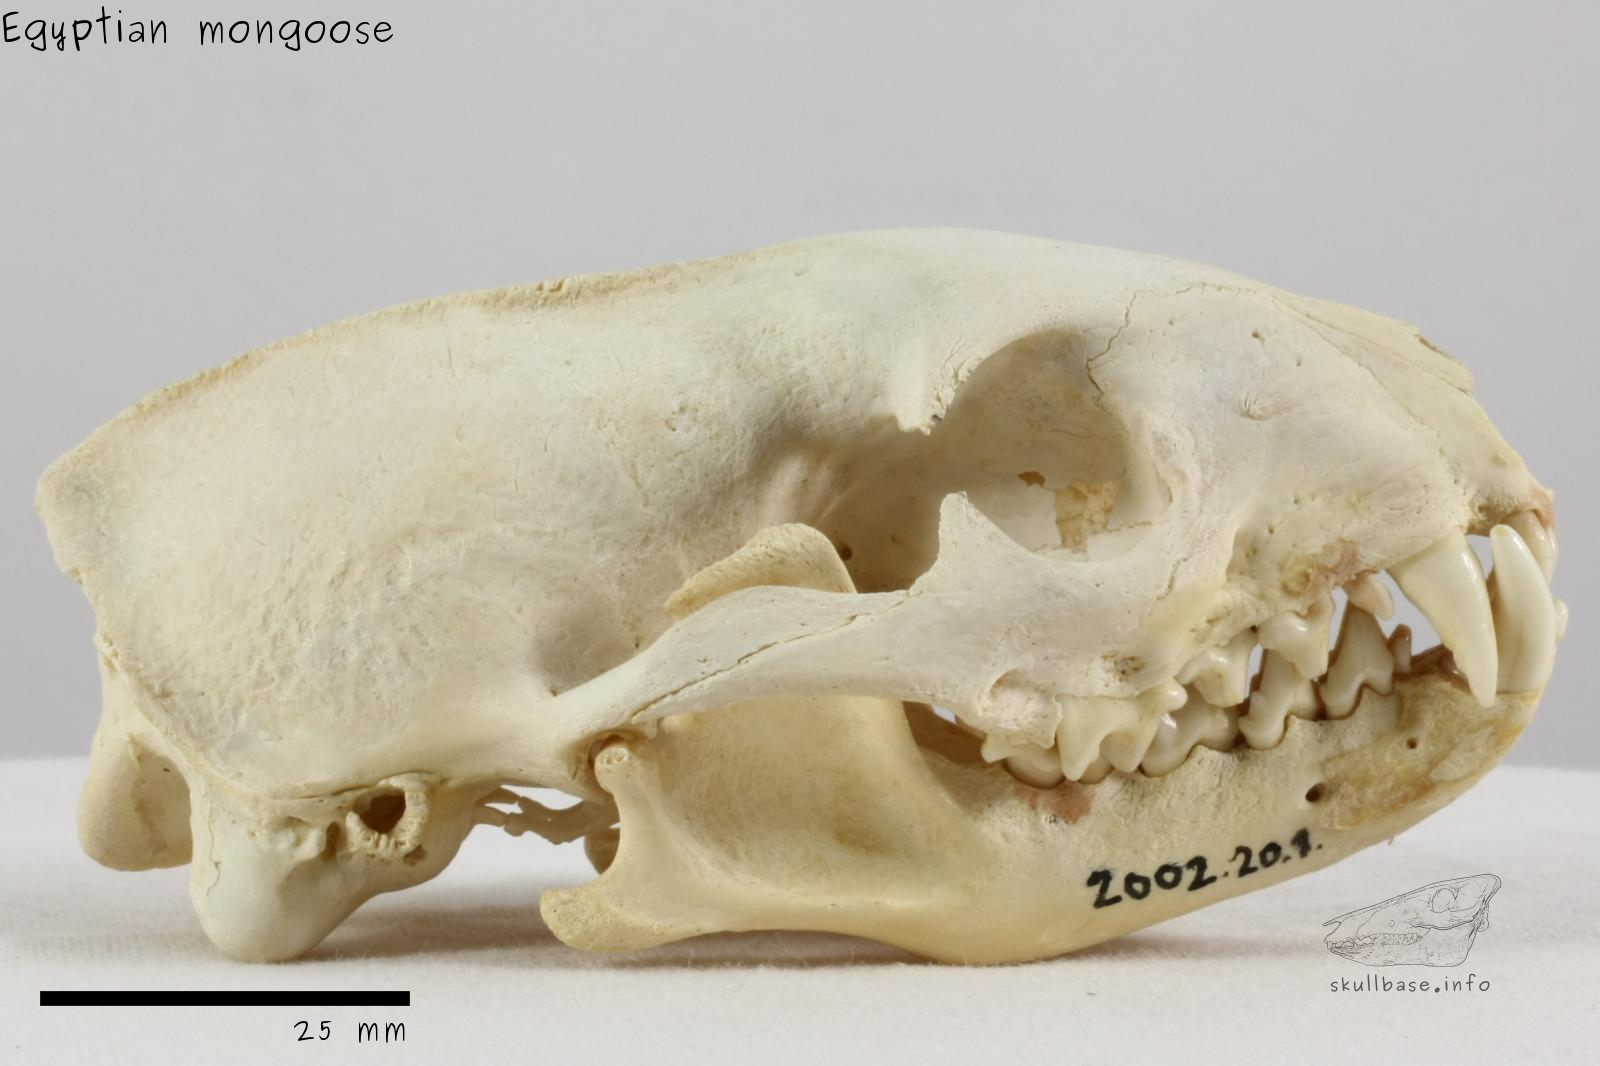 Egyptian mongoose (Herpestes ichneumon widdringtoni) skull lateral view